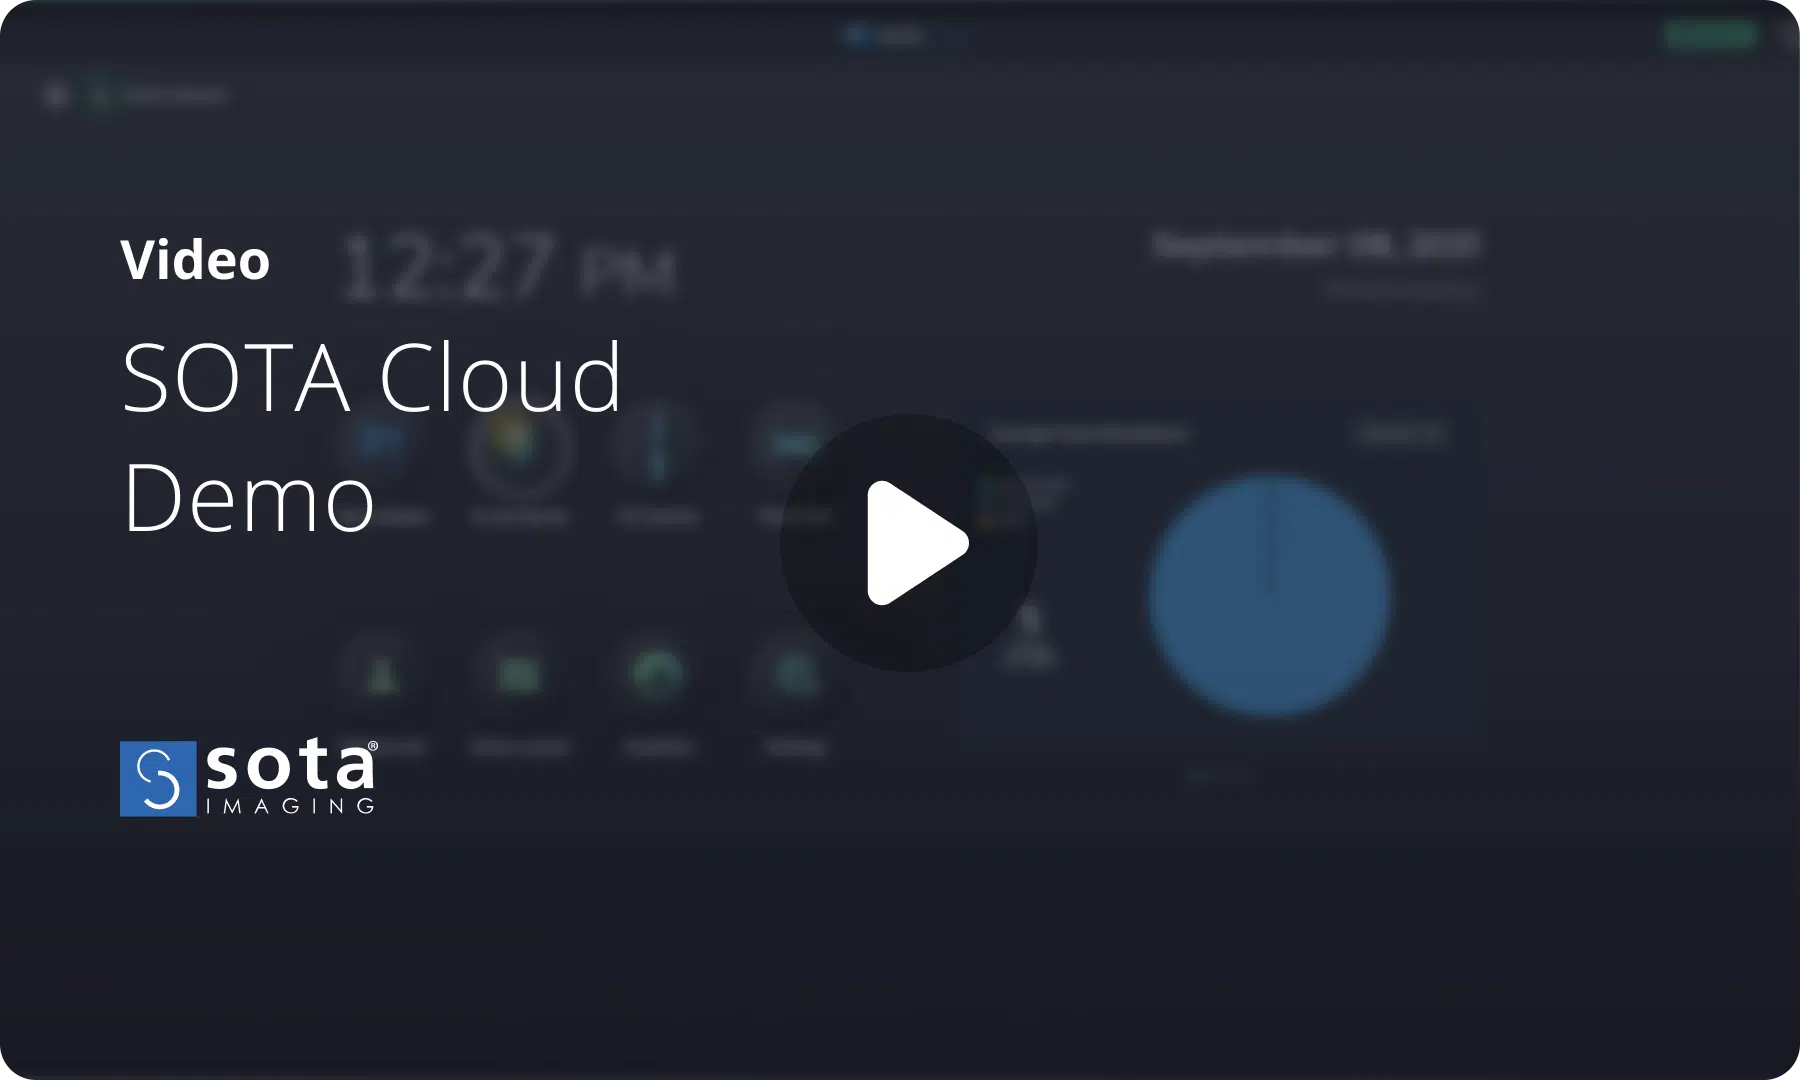 SOTA Cloud demo video